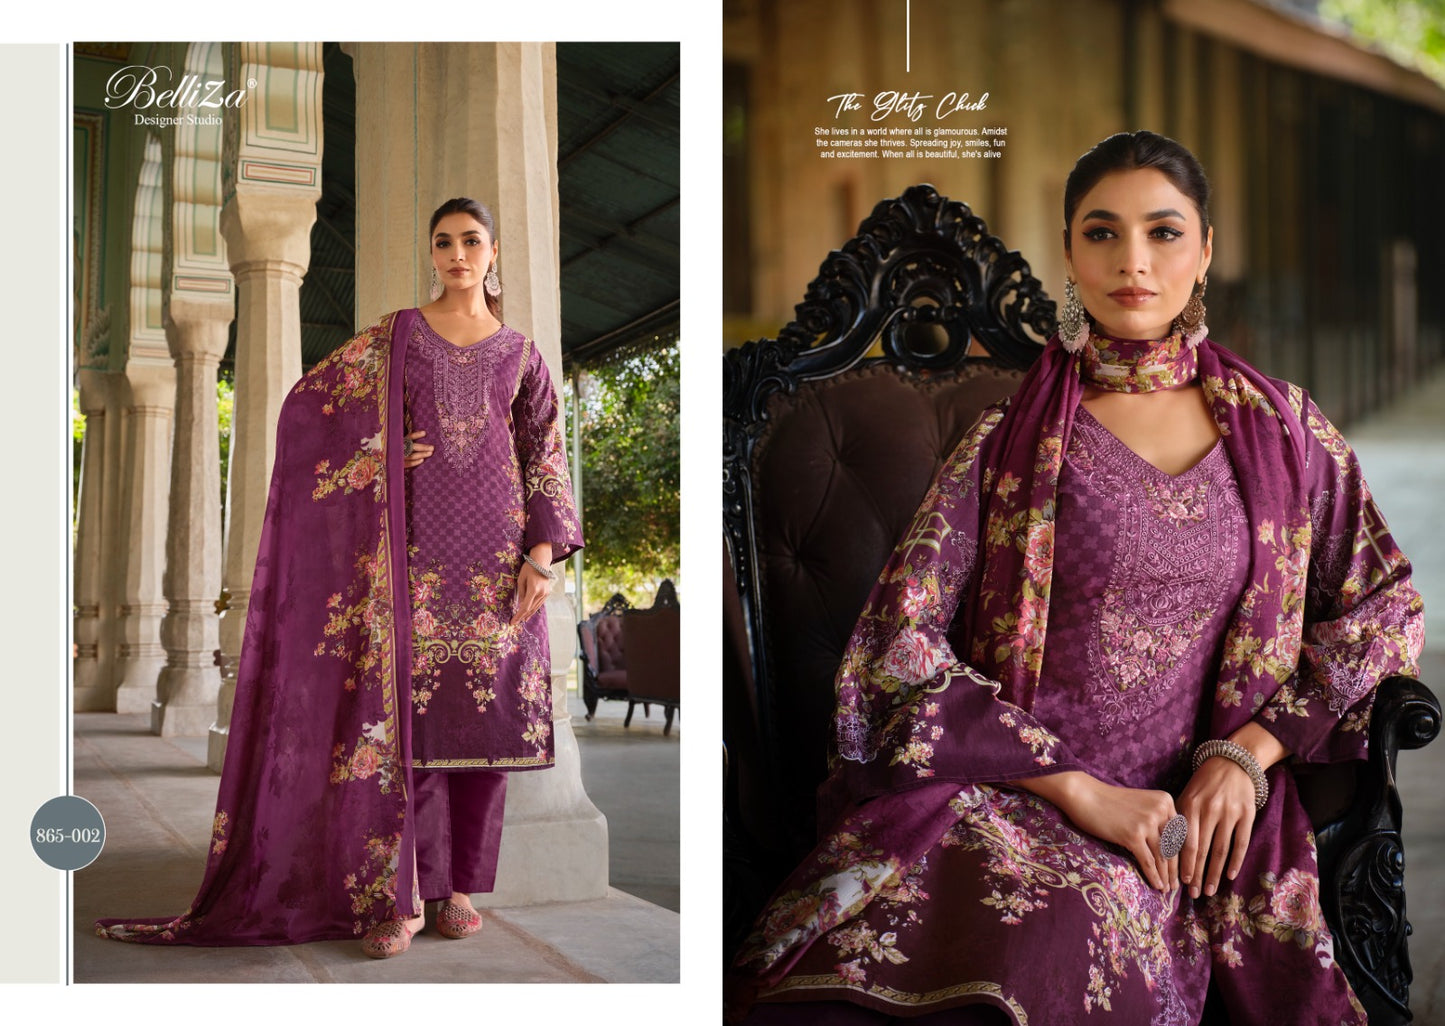 Naira Vol 28 Belliza Designer Studio Pure Cotton Karachi Salwar Suits